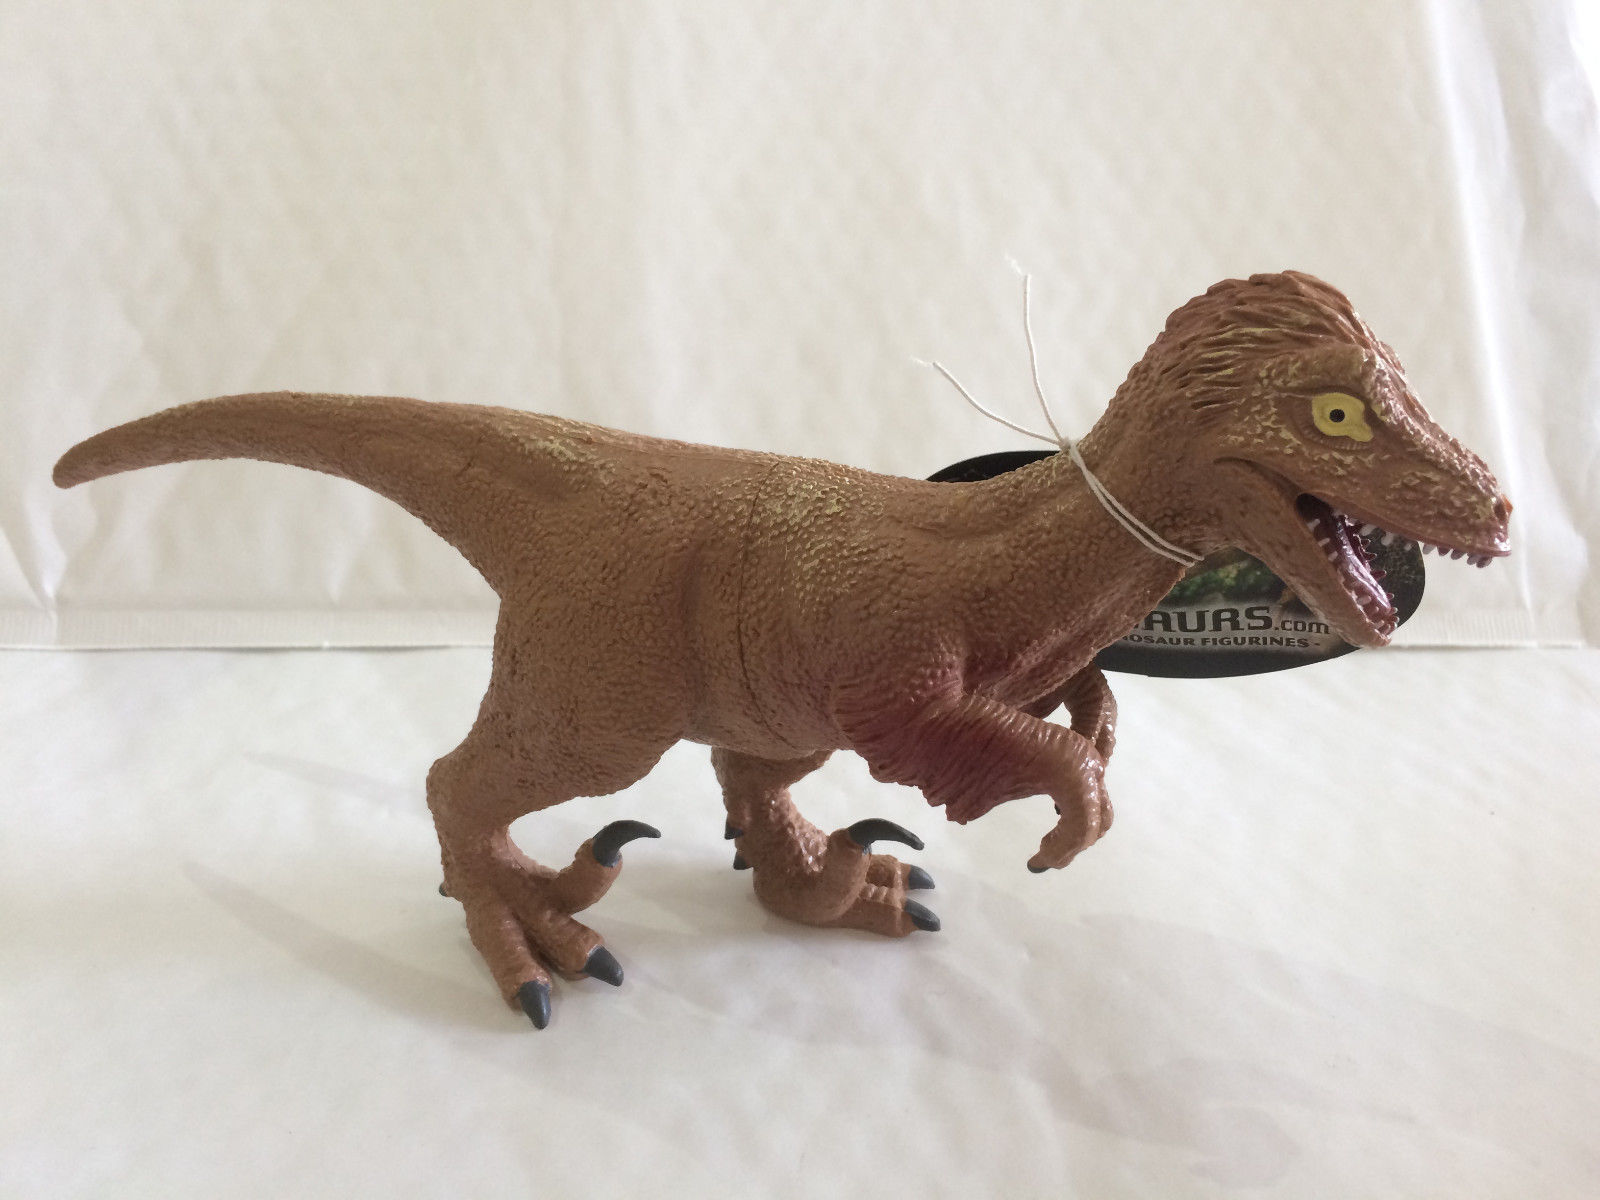 Megasaurs Dinosaur Figure